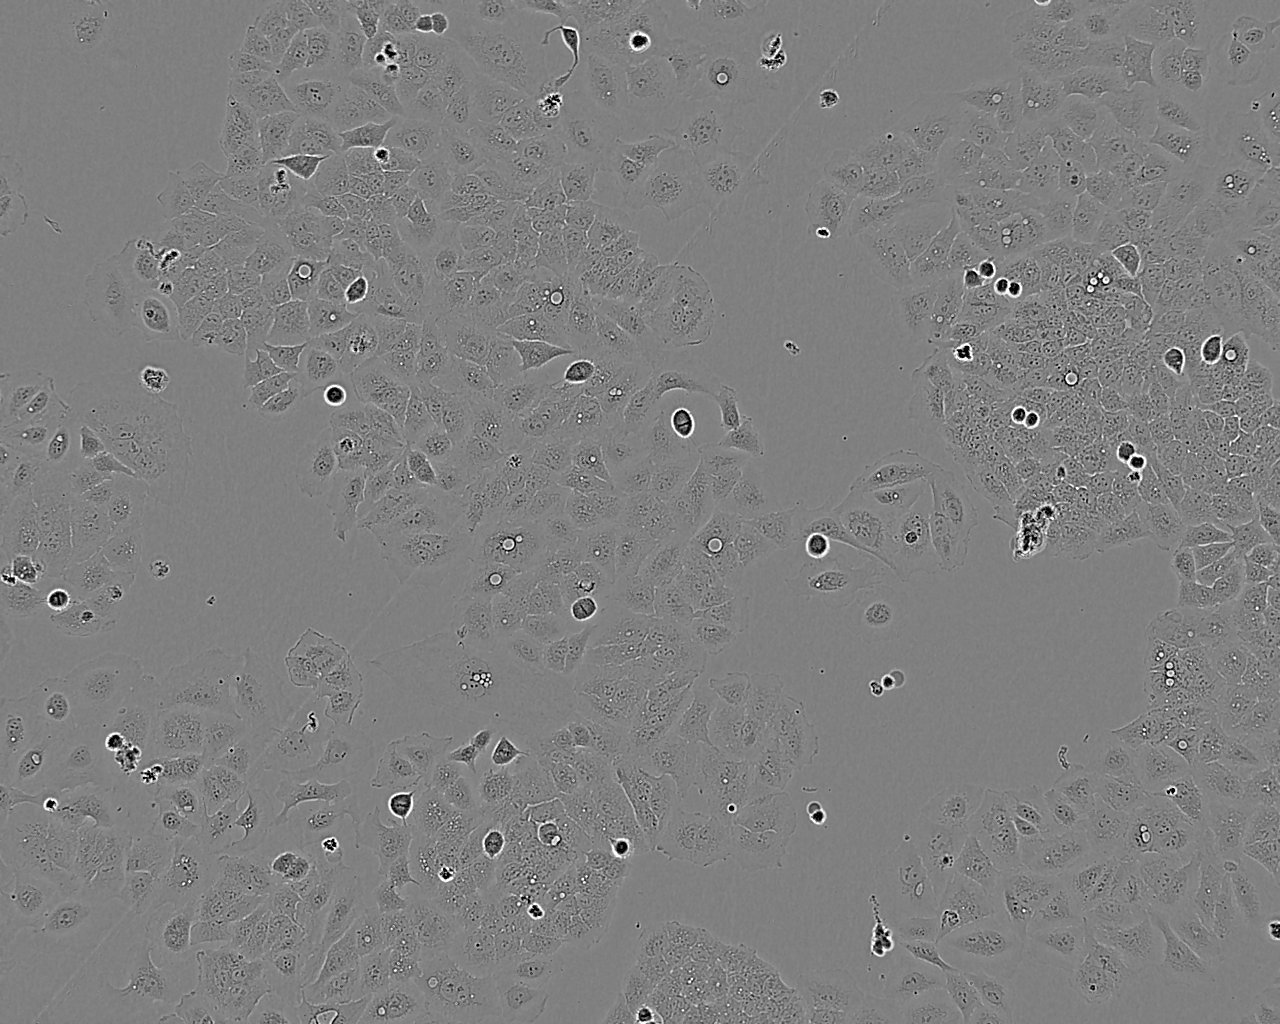 SK-MEL-28 epithelioid cells人恶性黑色素瘤细胞系,SK-MEL-28 epithelioid cells